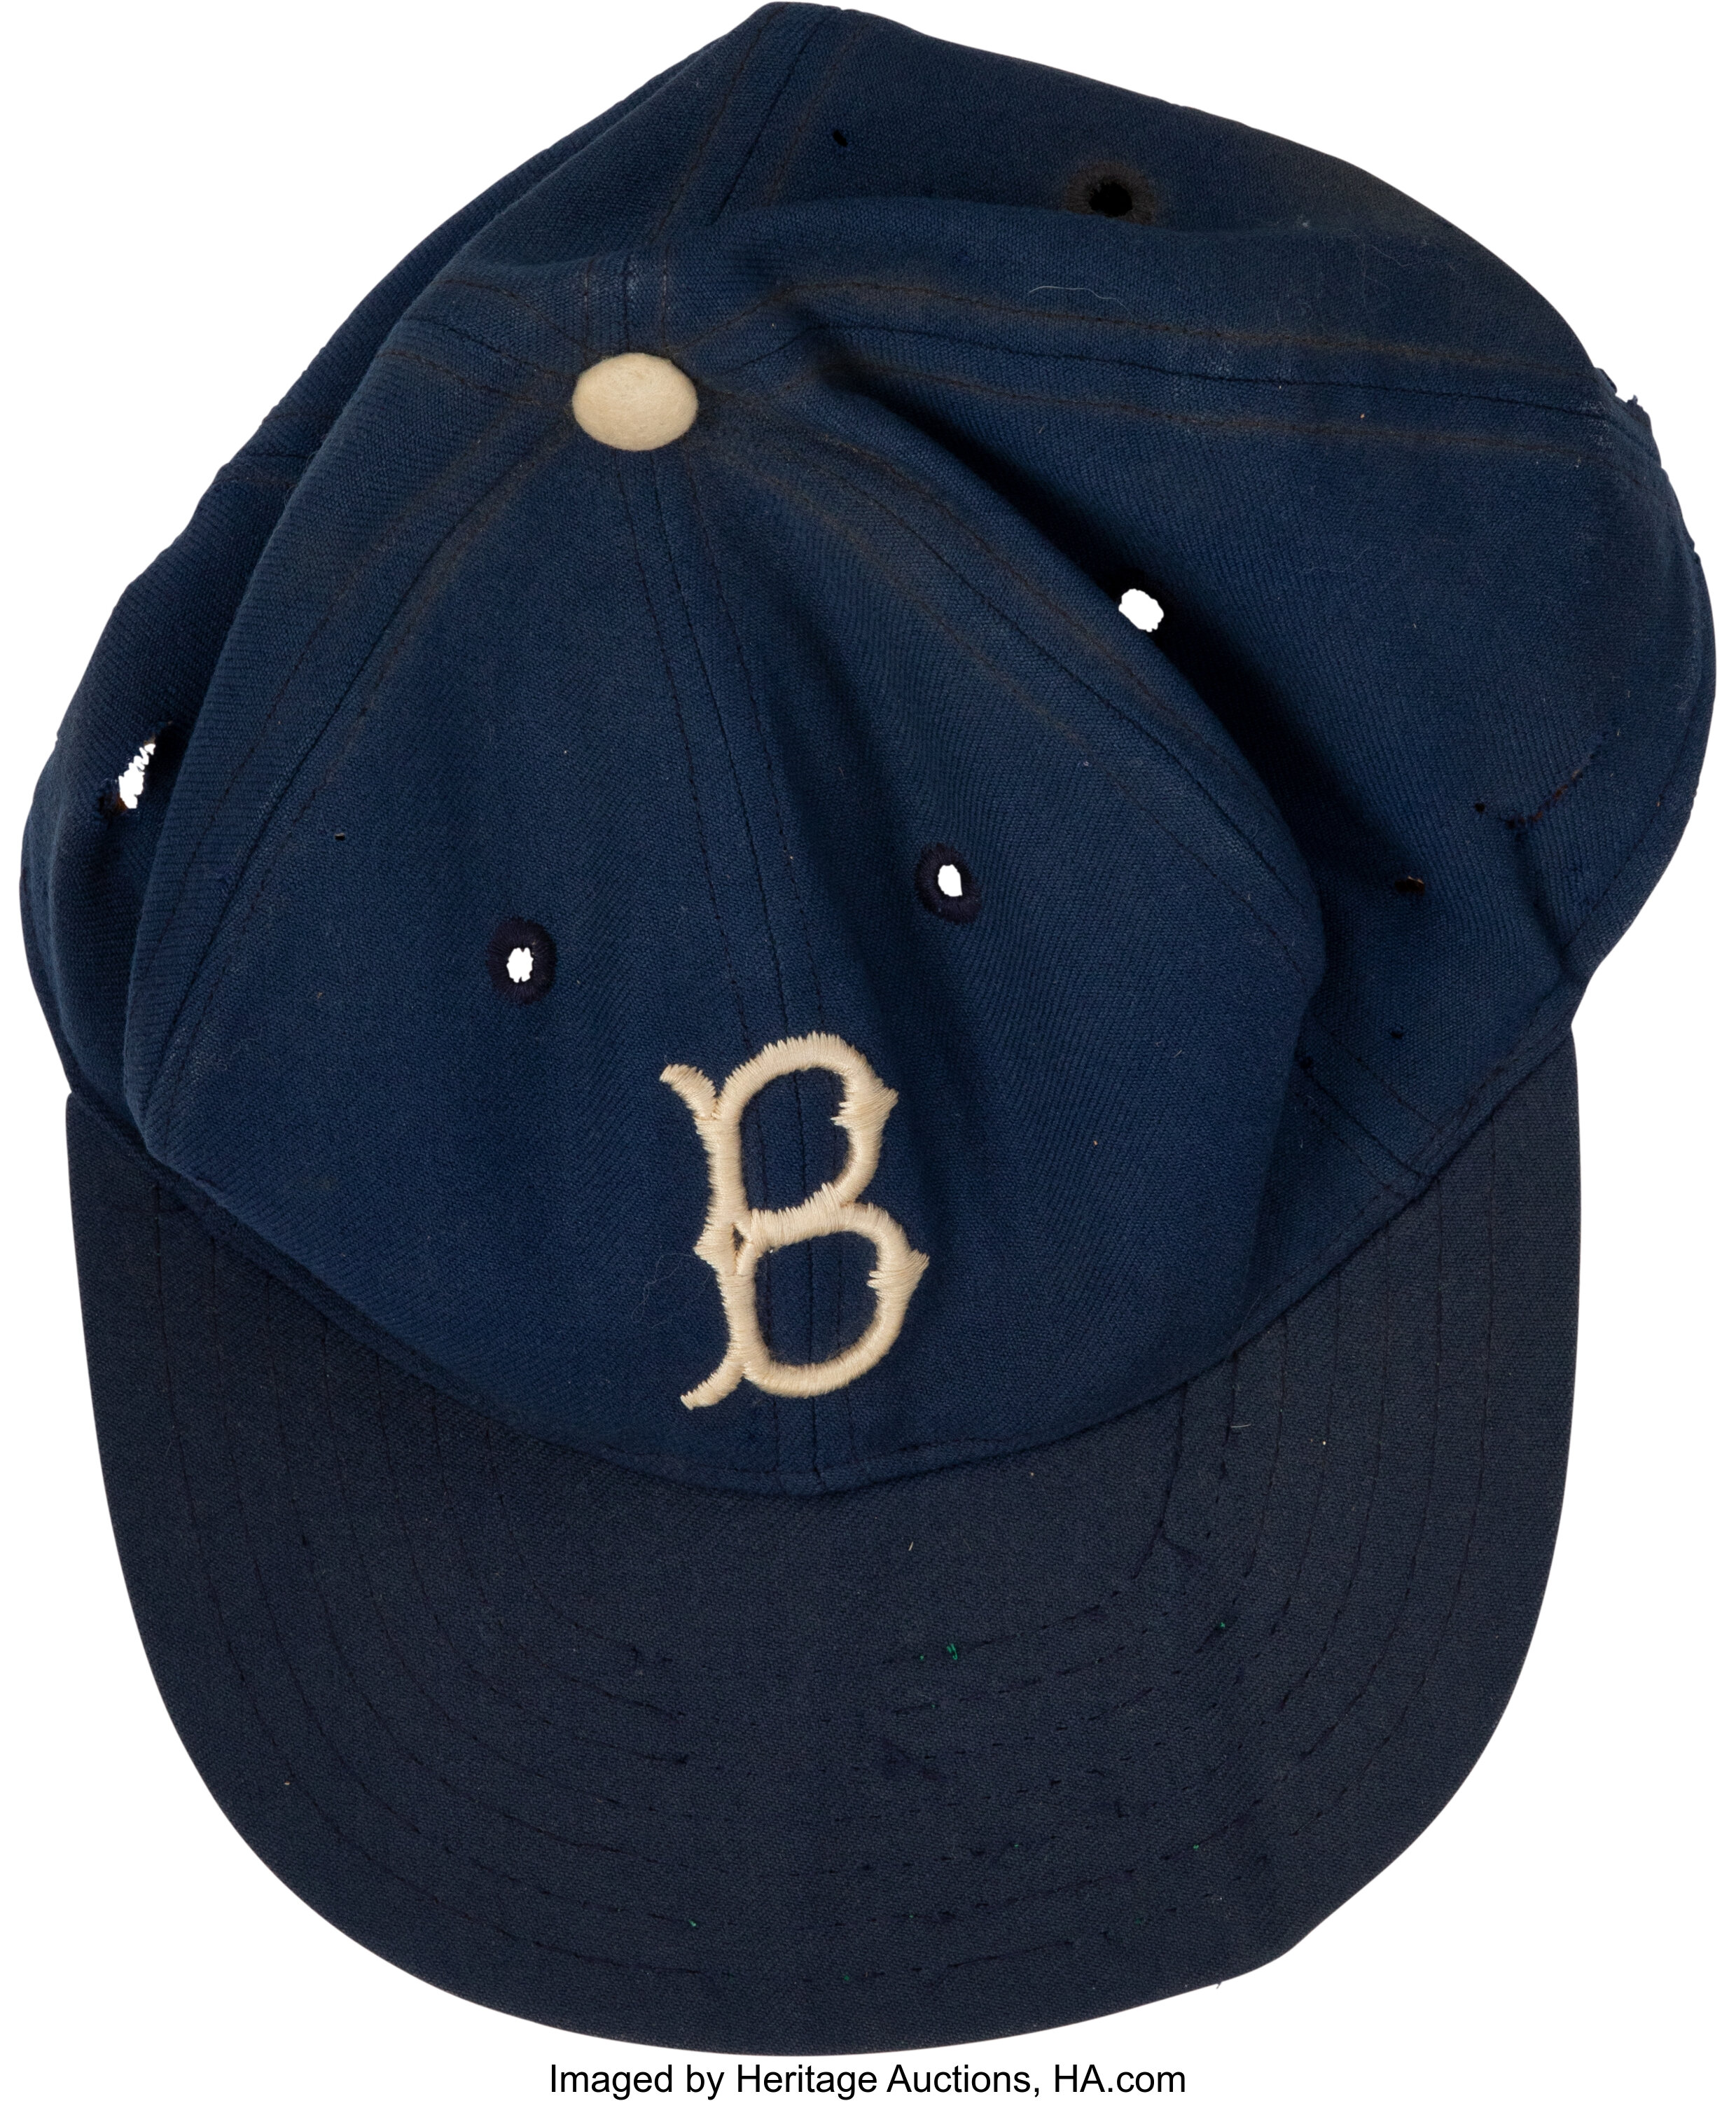 Don Drysdale Jersey - 1957 Brooklyn Dodgers Away Throwback Baseball Jersey